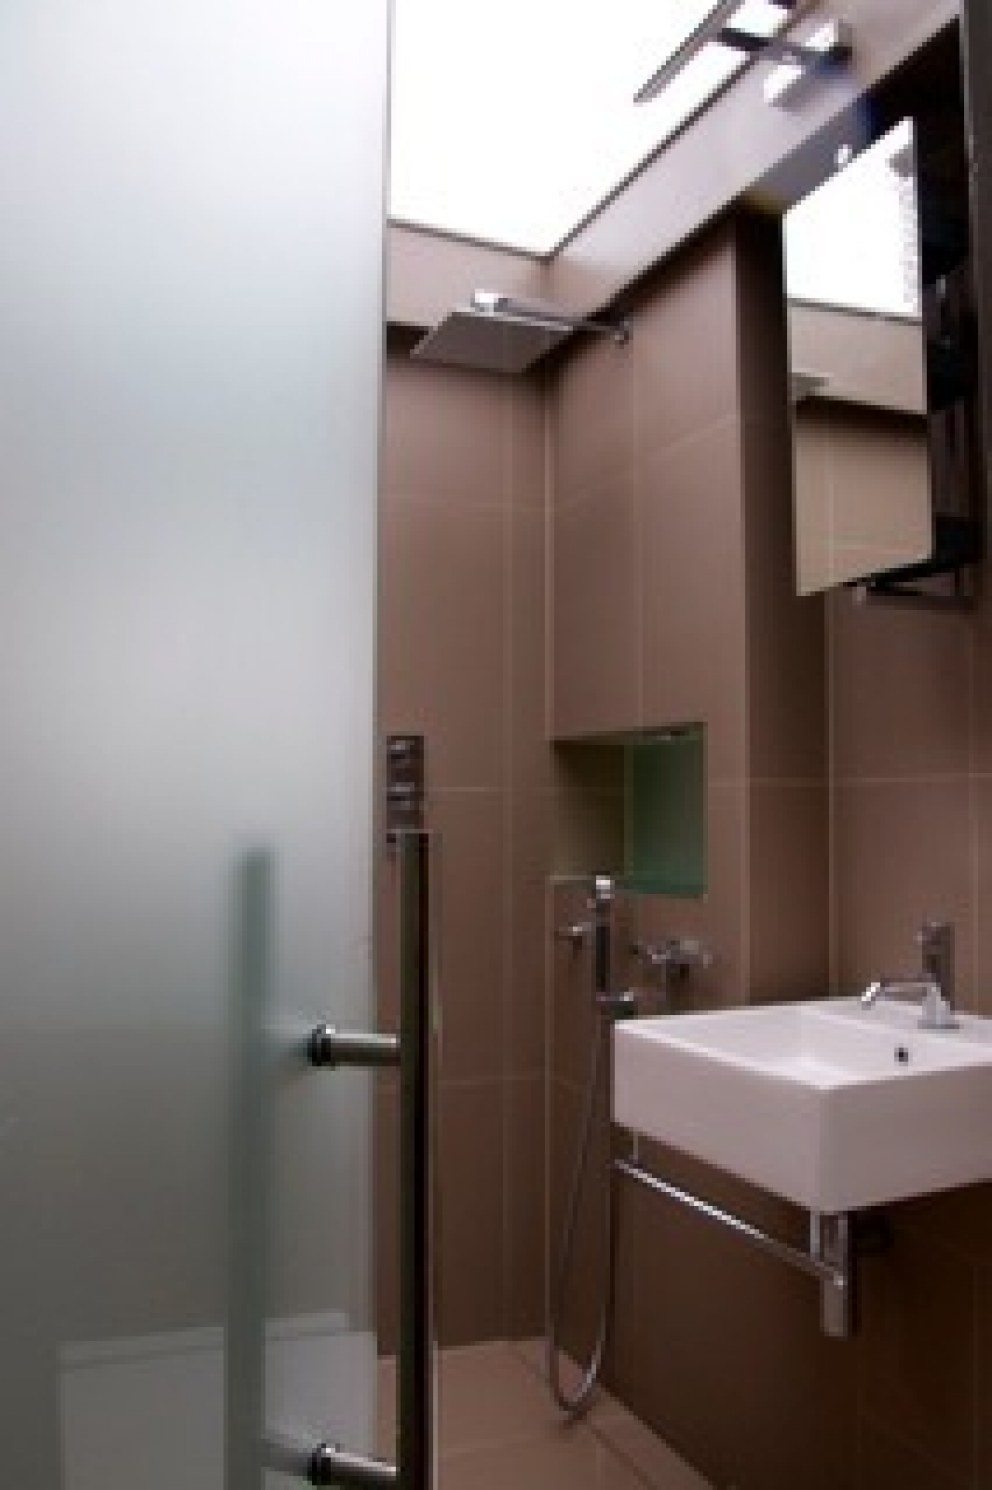 Tiny Bathroom with skylight | Looking into the bathroom | Interior Designers